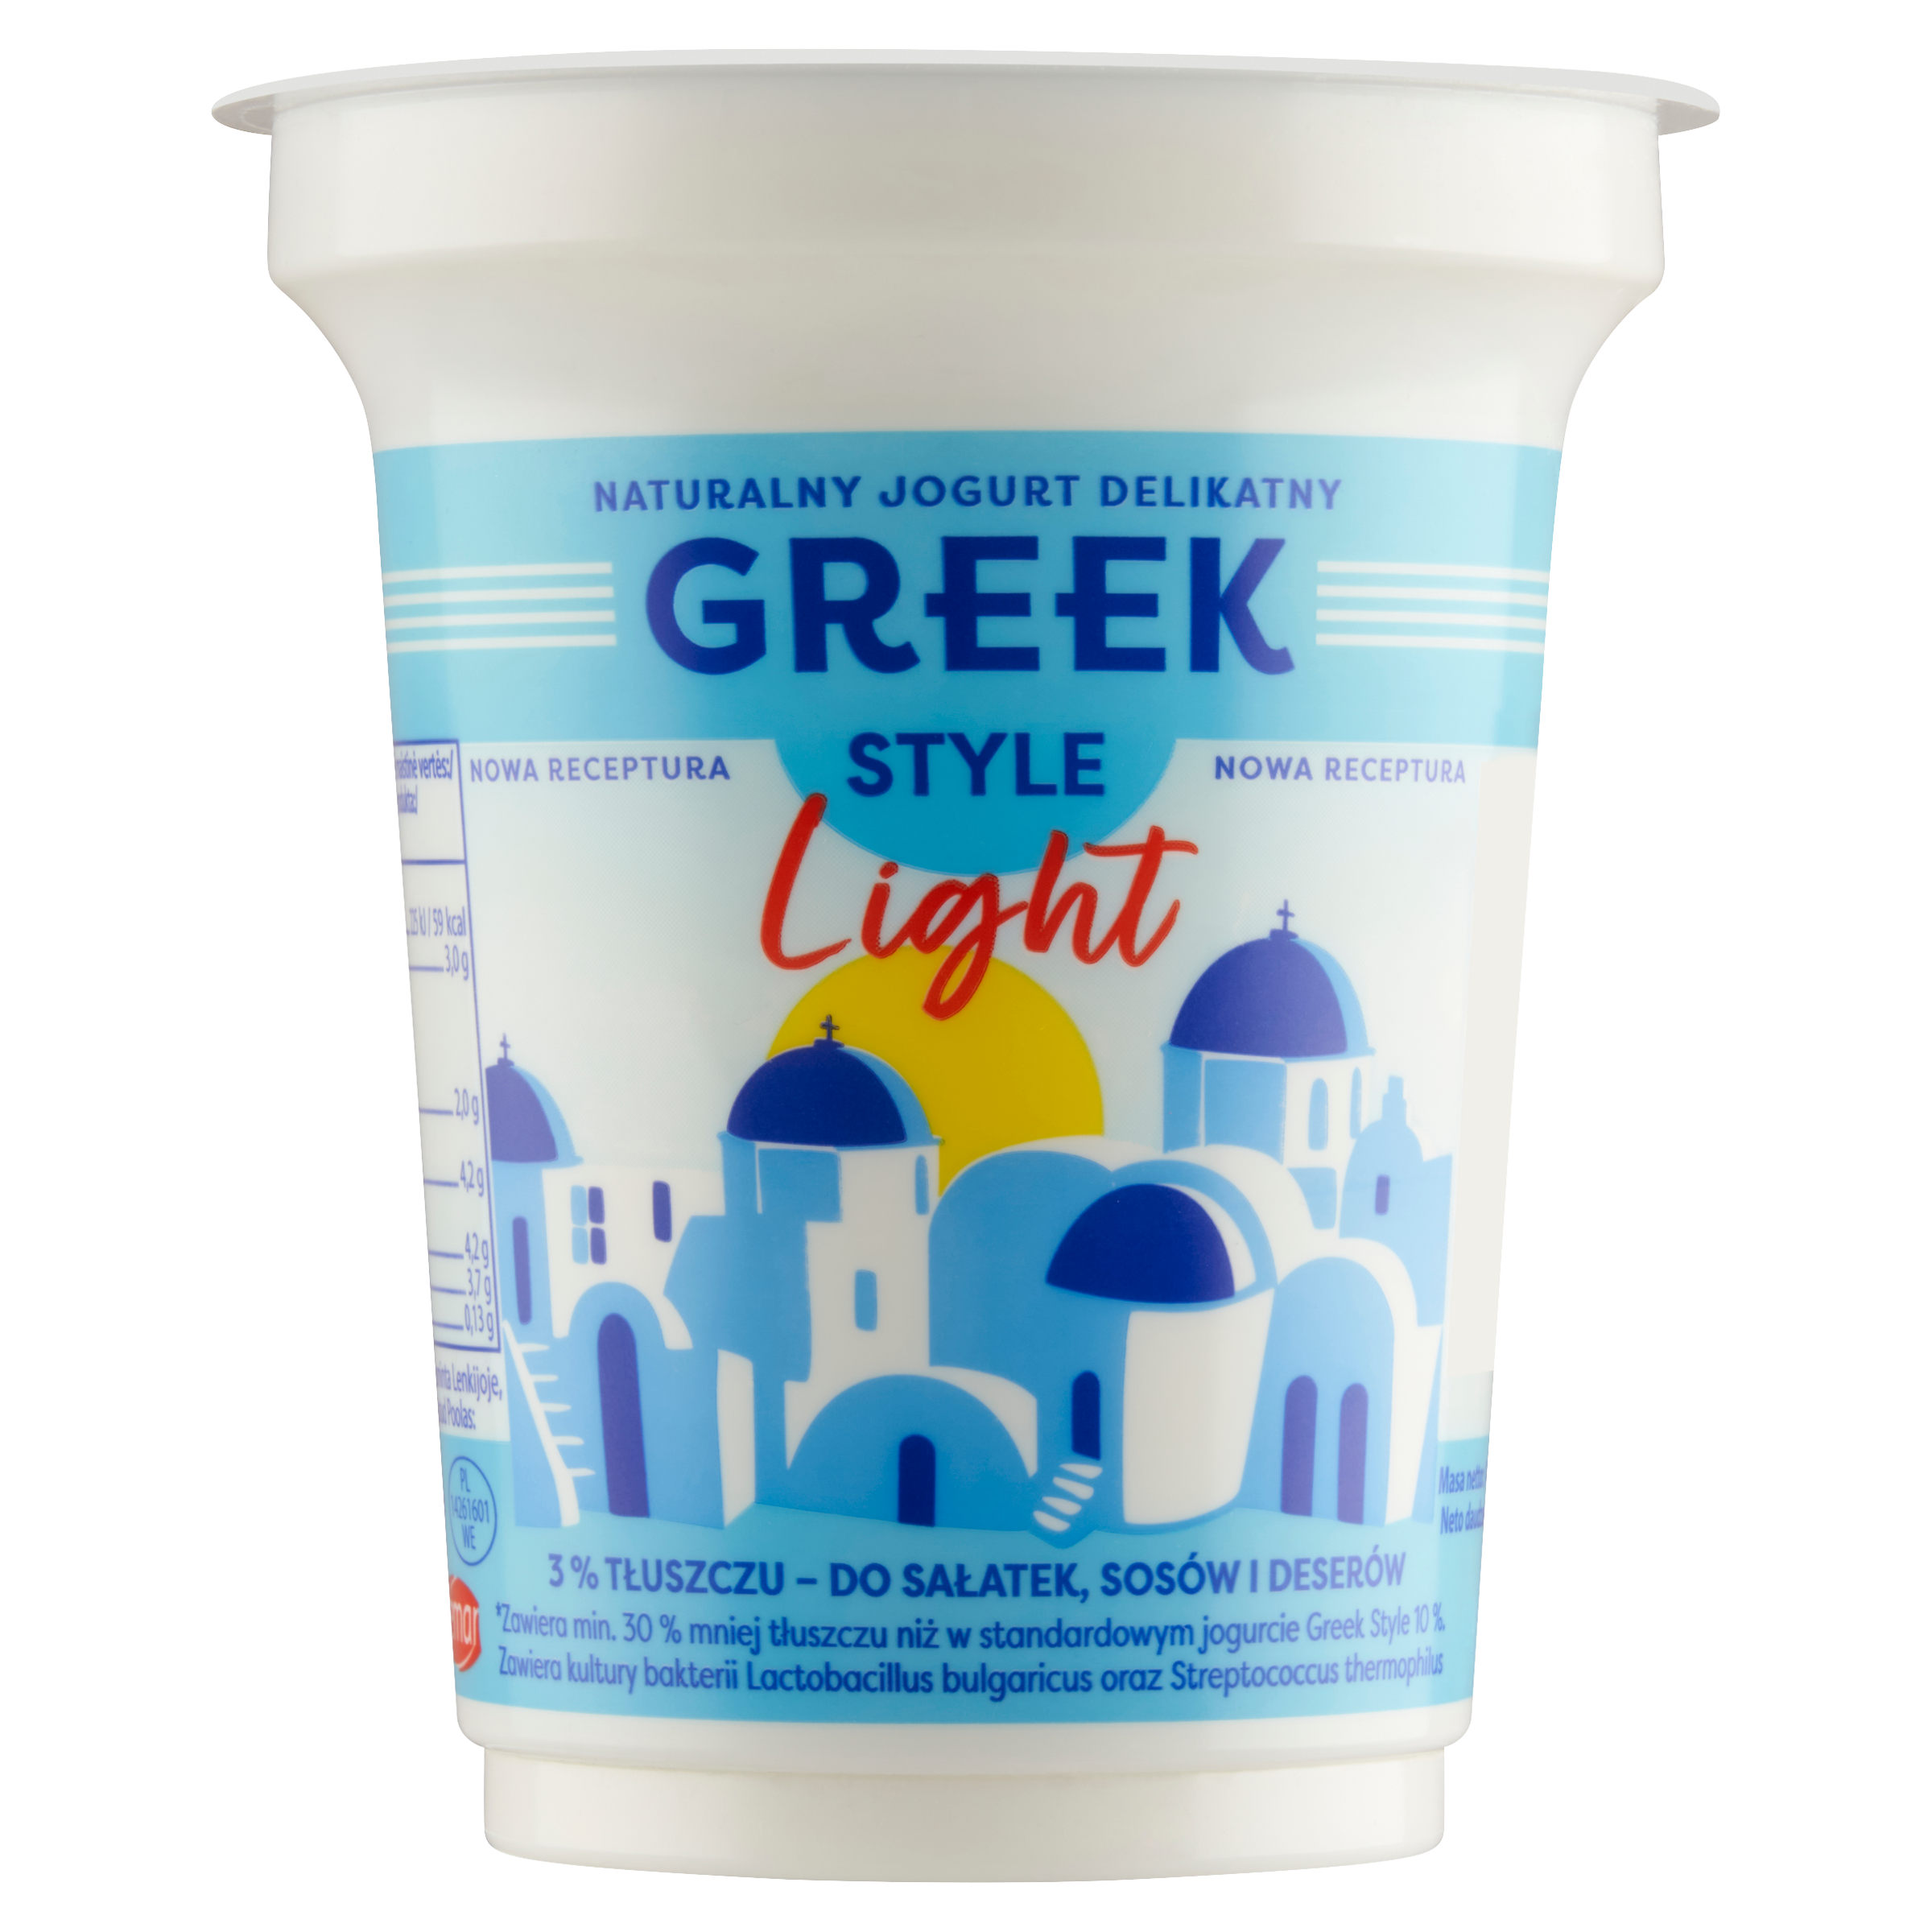 GREEK STYLE LIGHT YOGHURT